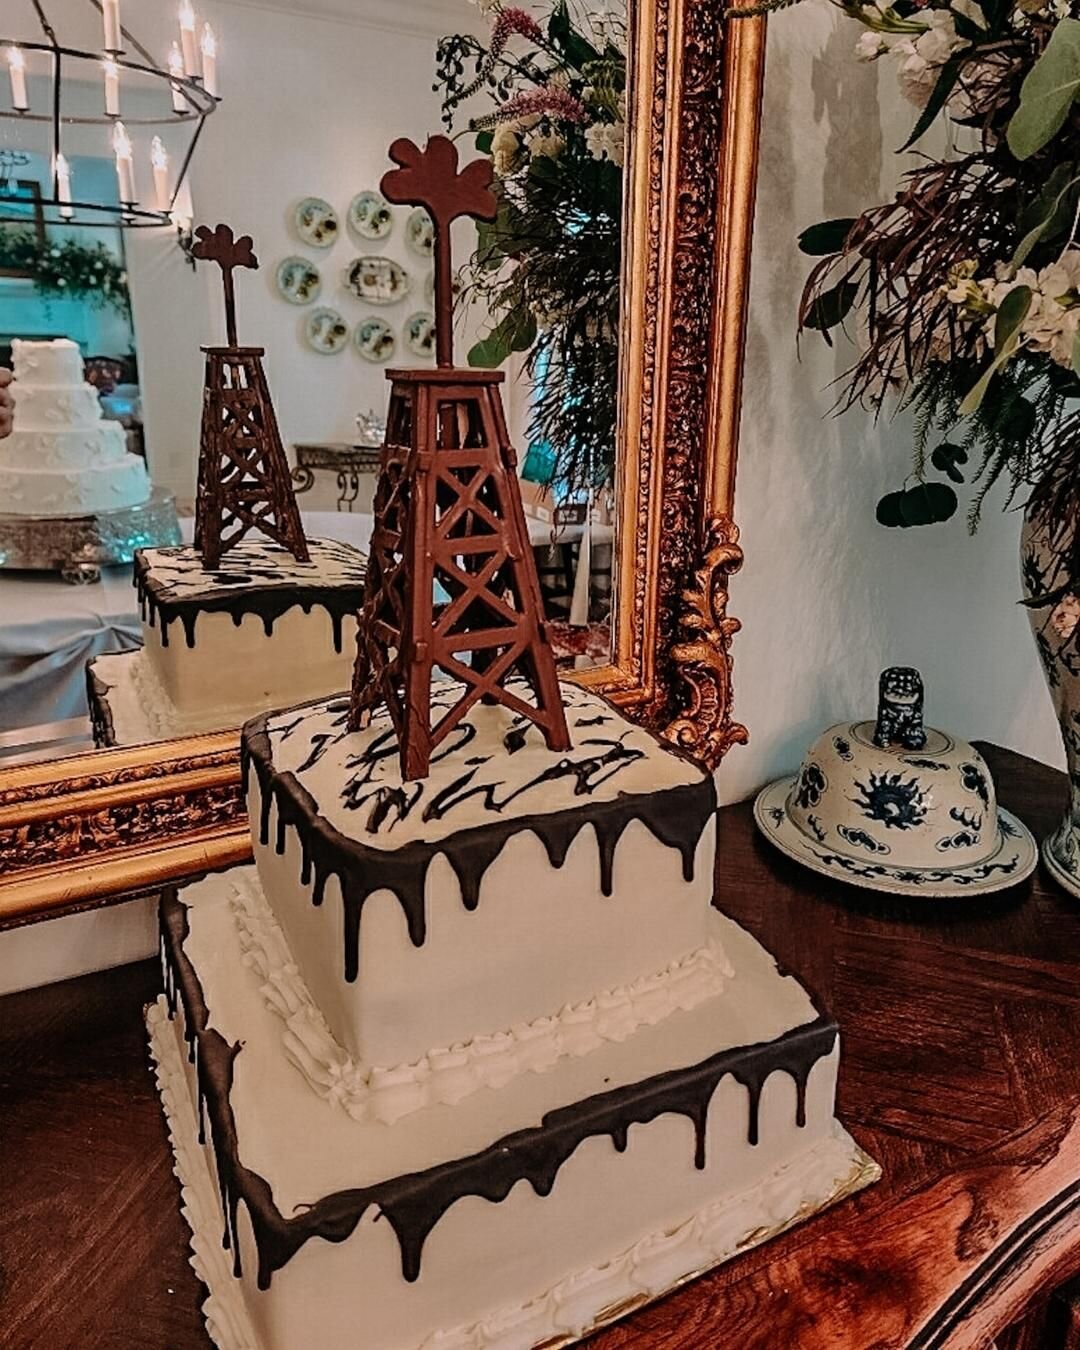 Name something better than chocolate...we'll wait. #cakesbycathyyoung #wedding #weddingcake #cake #cakedesign #cakedesigner #cakesofinstagram #sanantonioweddings #weddingsinsanantonio